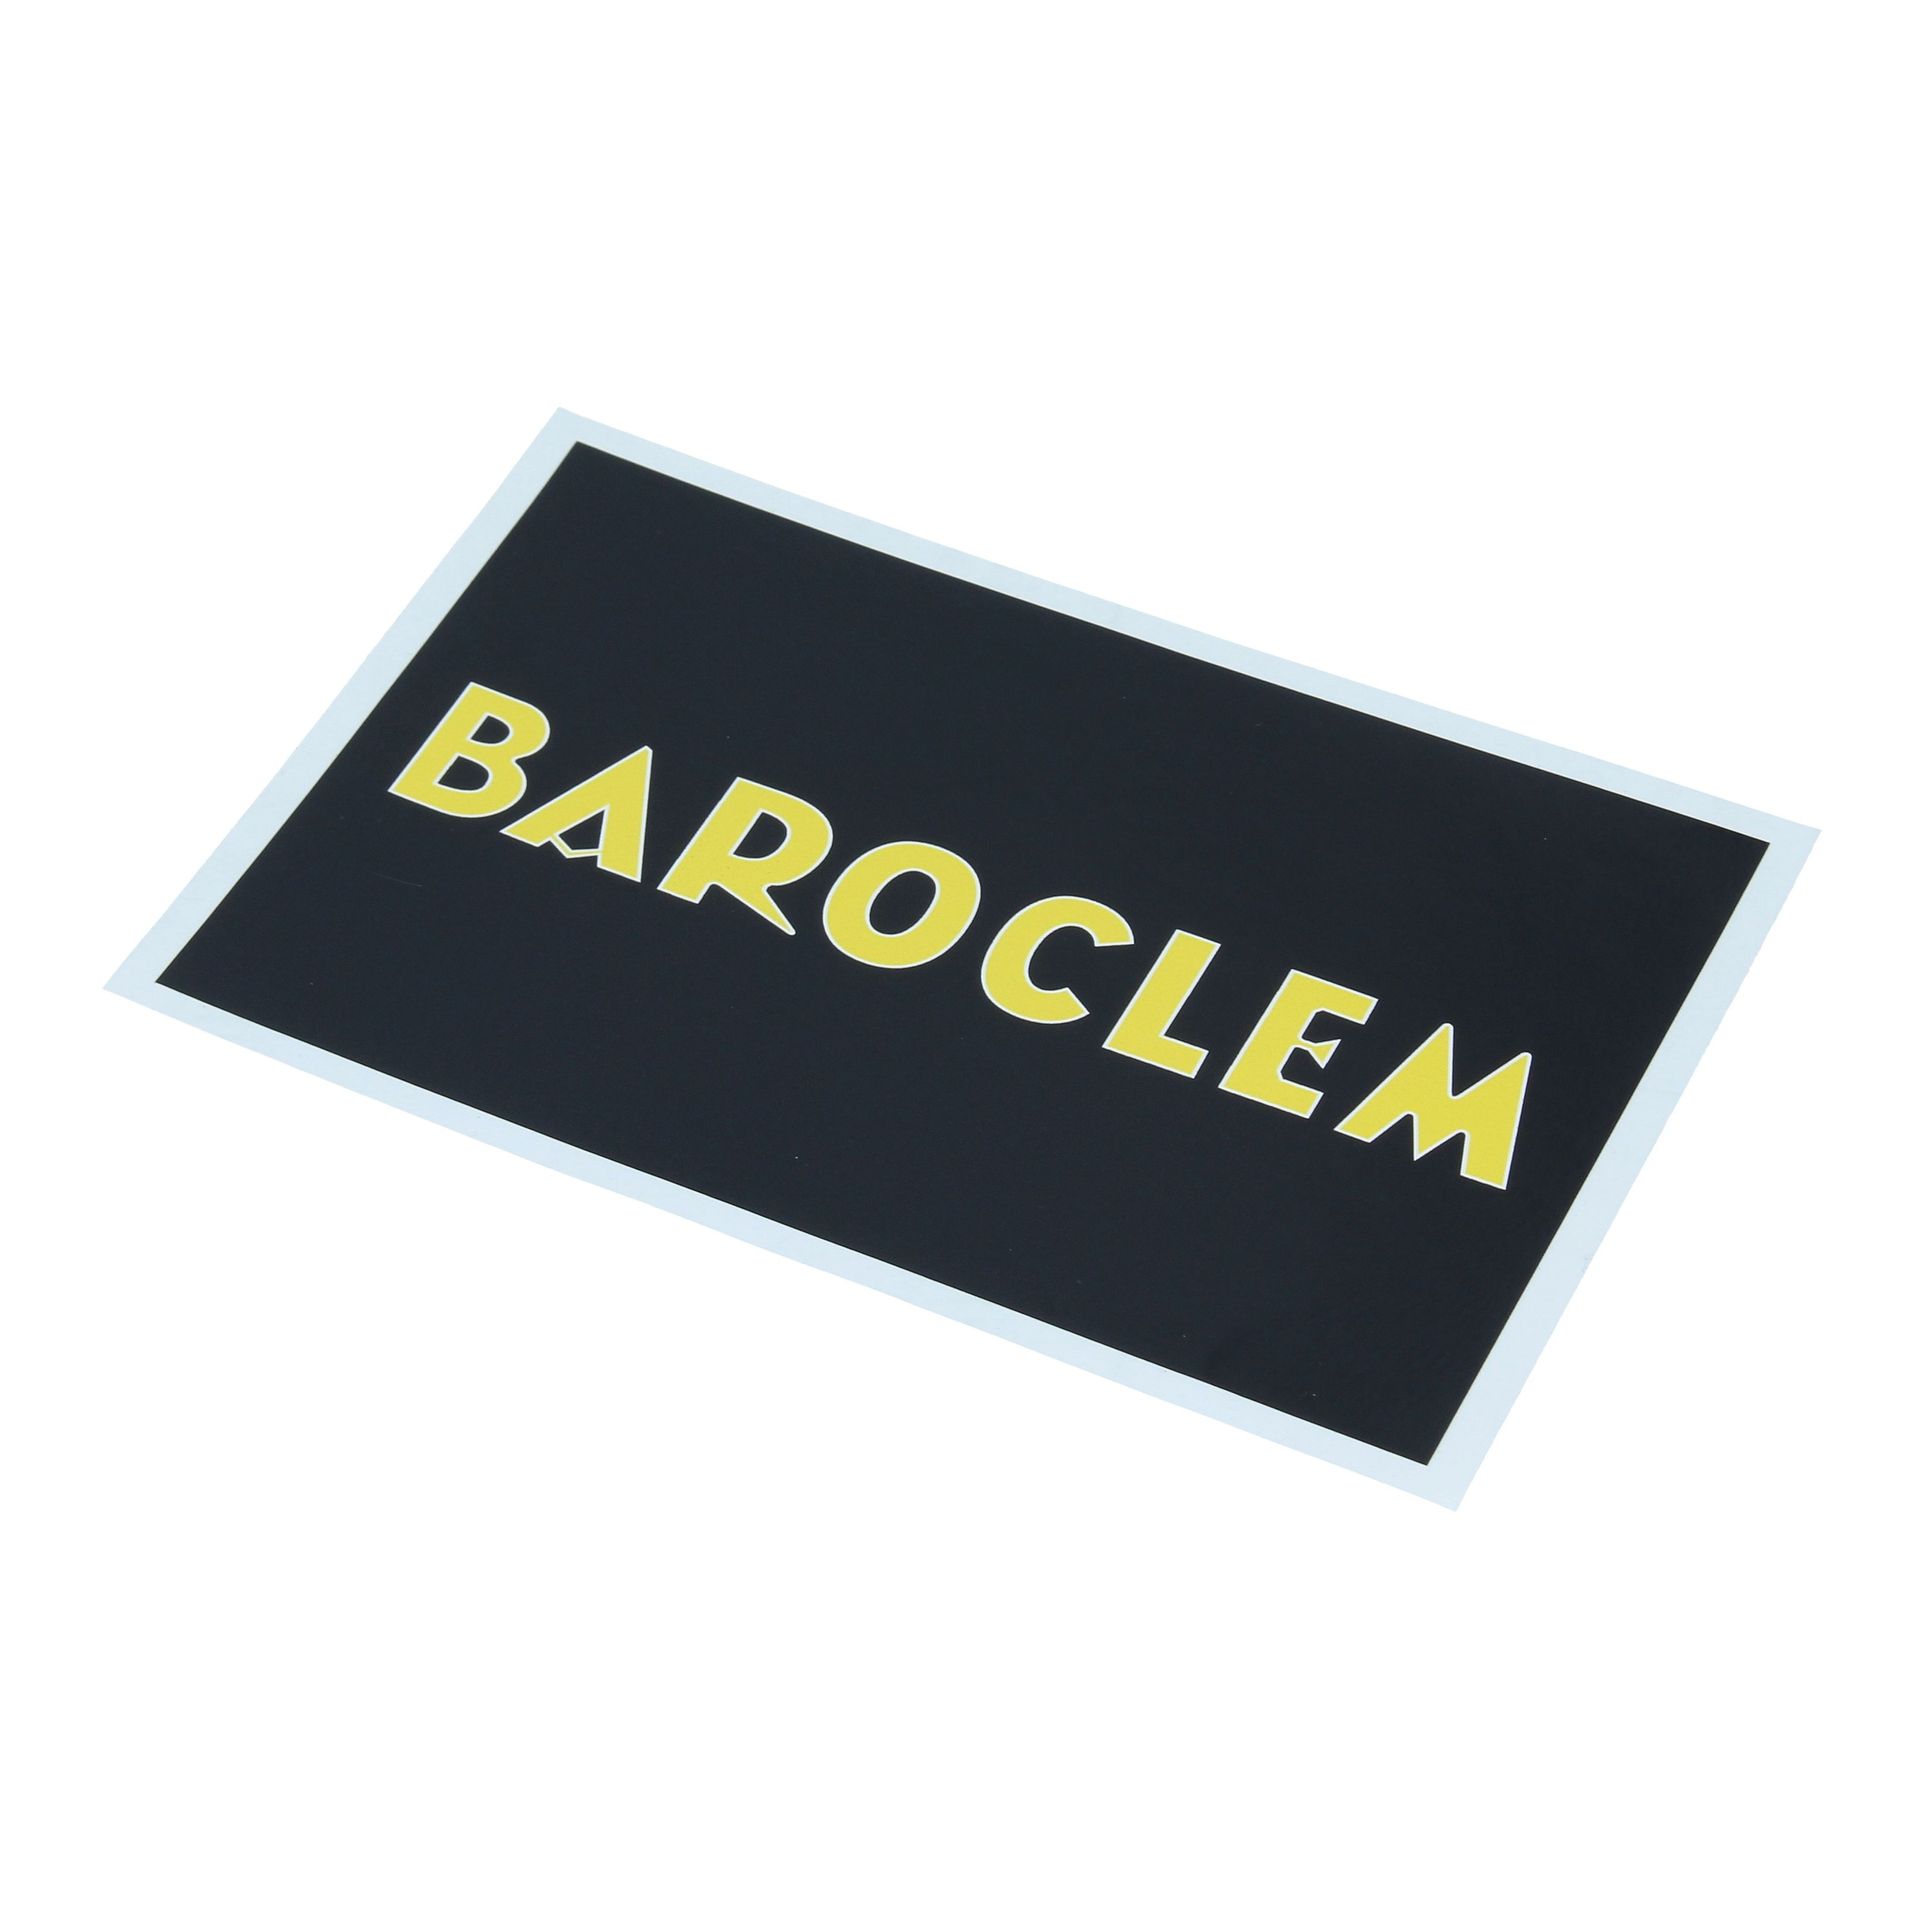 Baroclem Battery Sticker